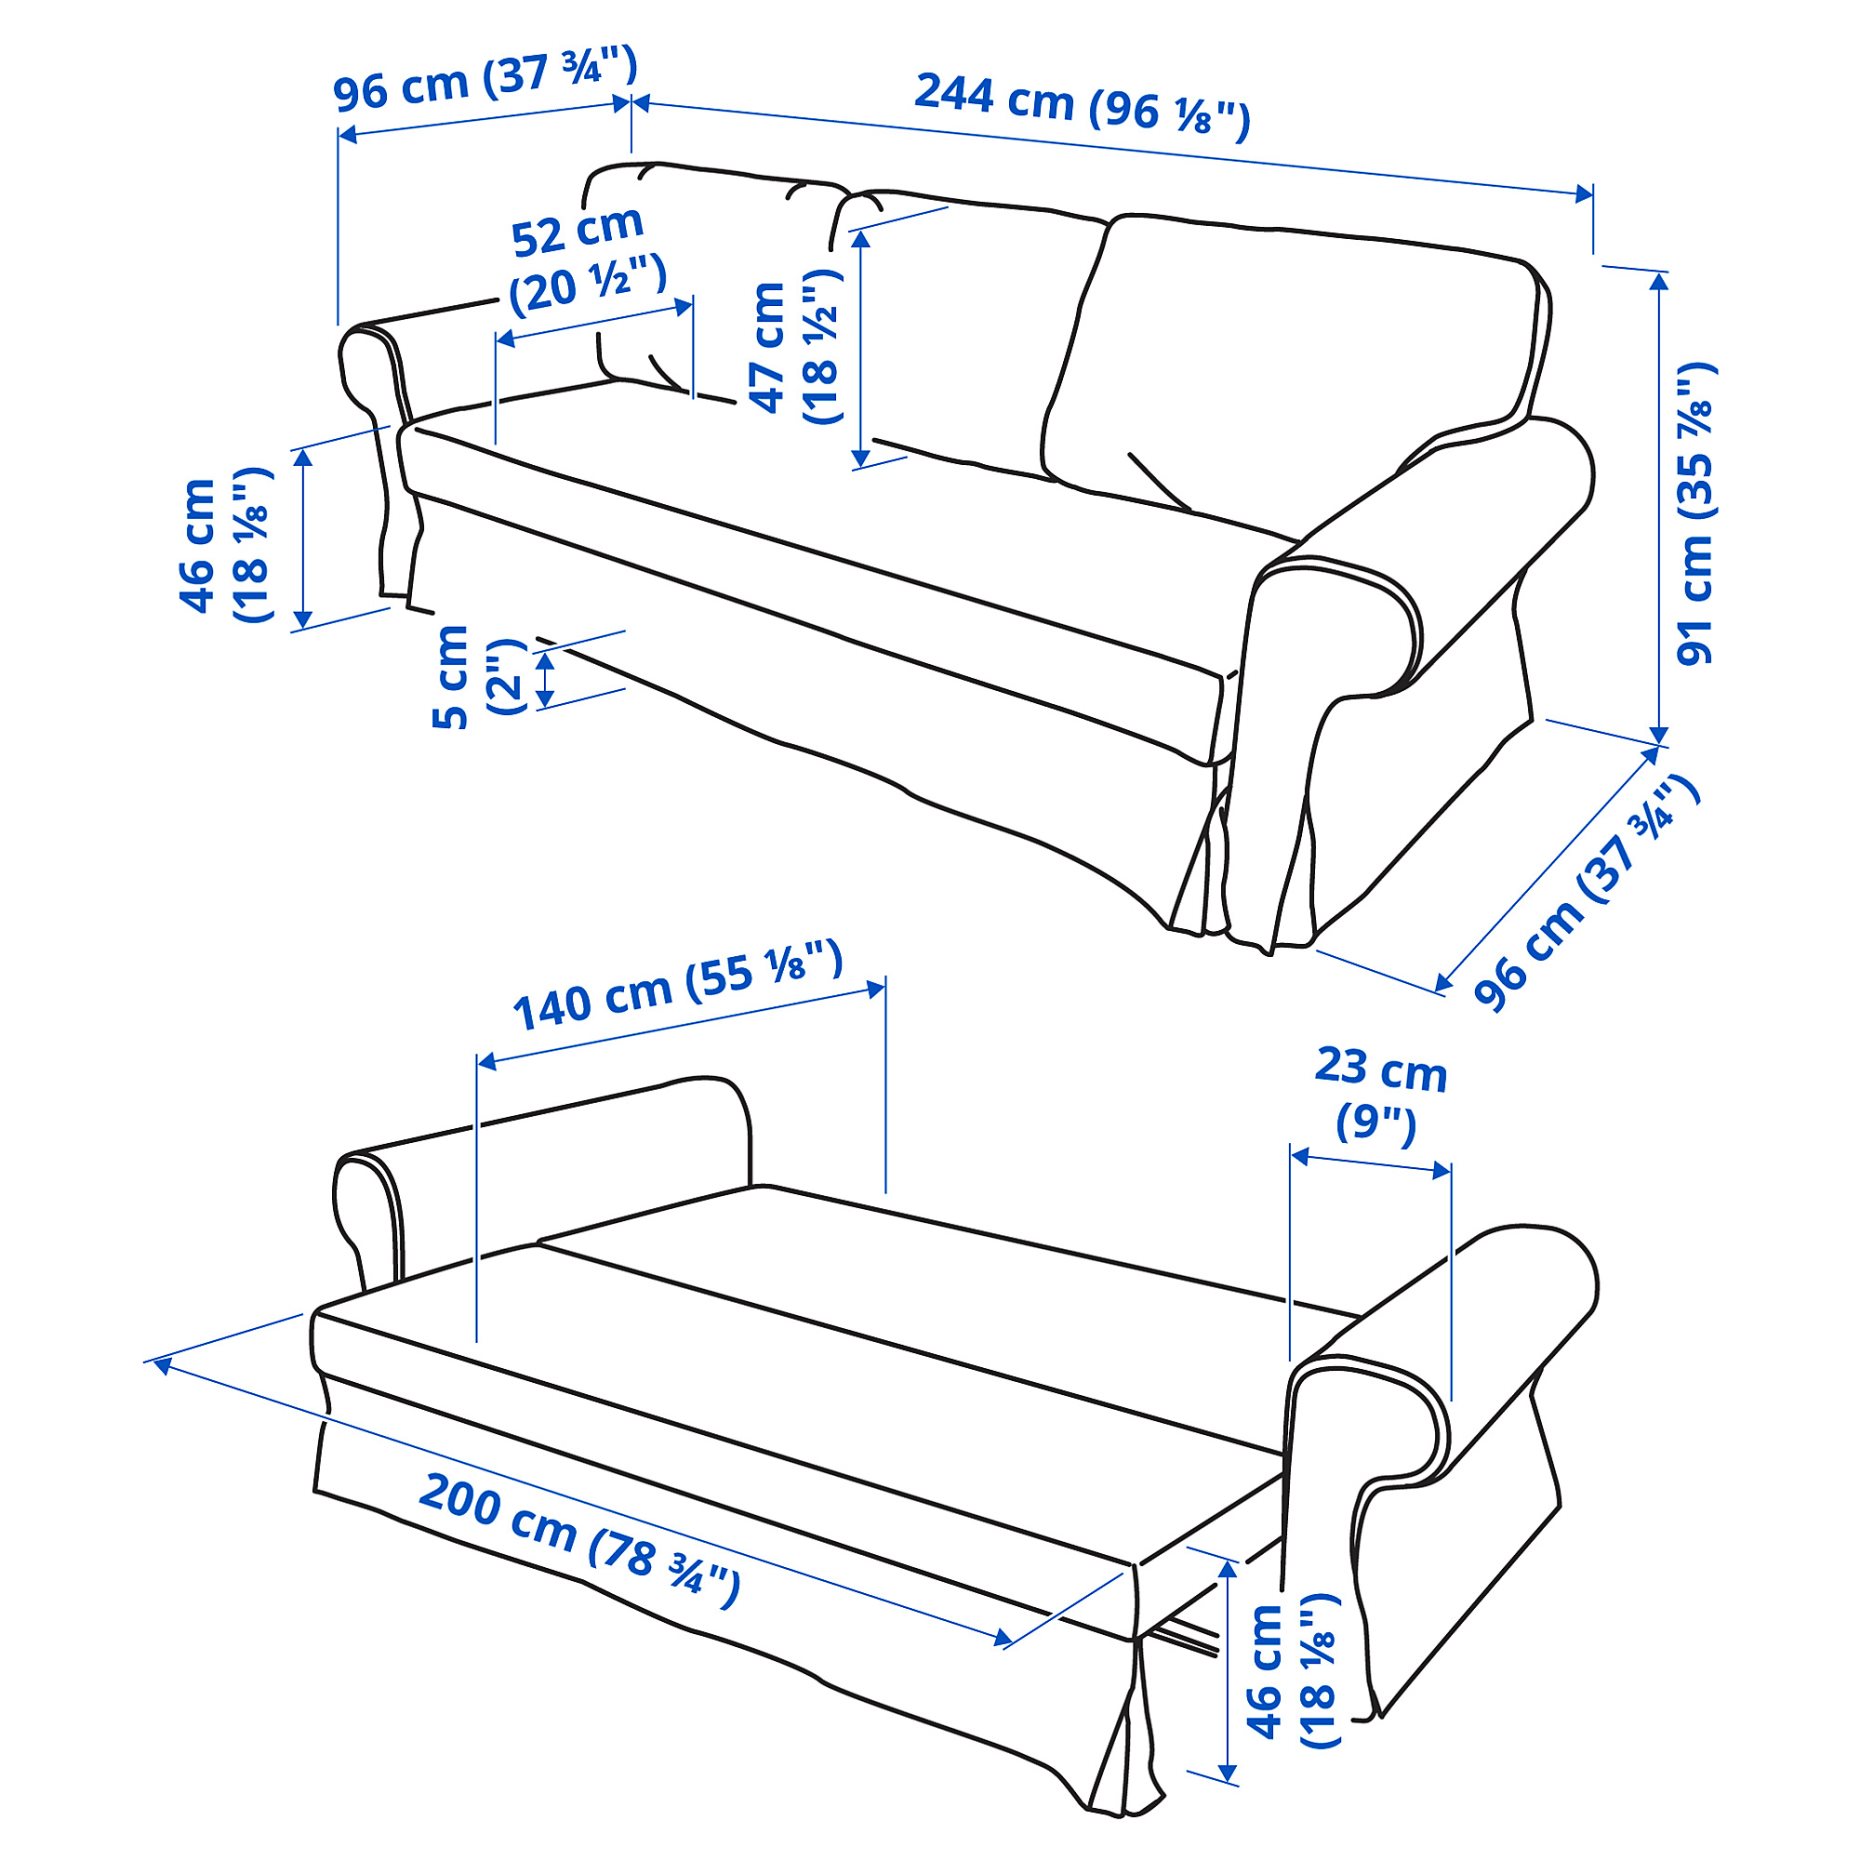 VRETSTORP, 3-seat sofa-bed, 593.201.08